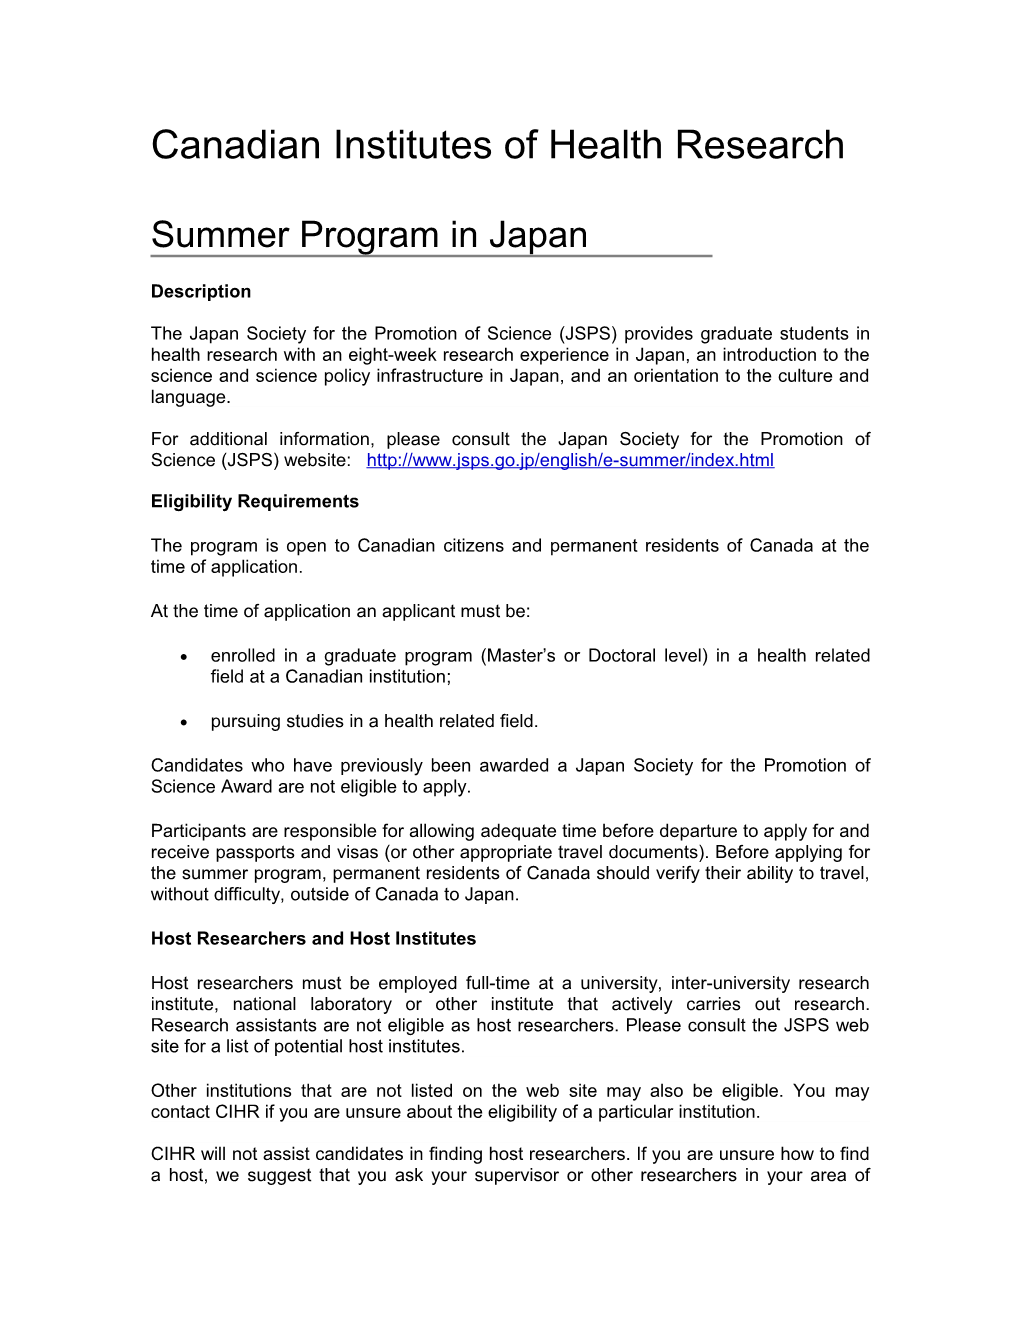 Summer Program in Japan Or Taiwan